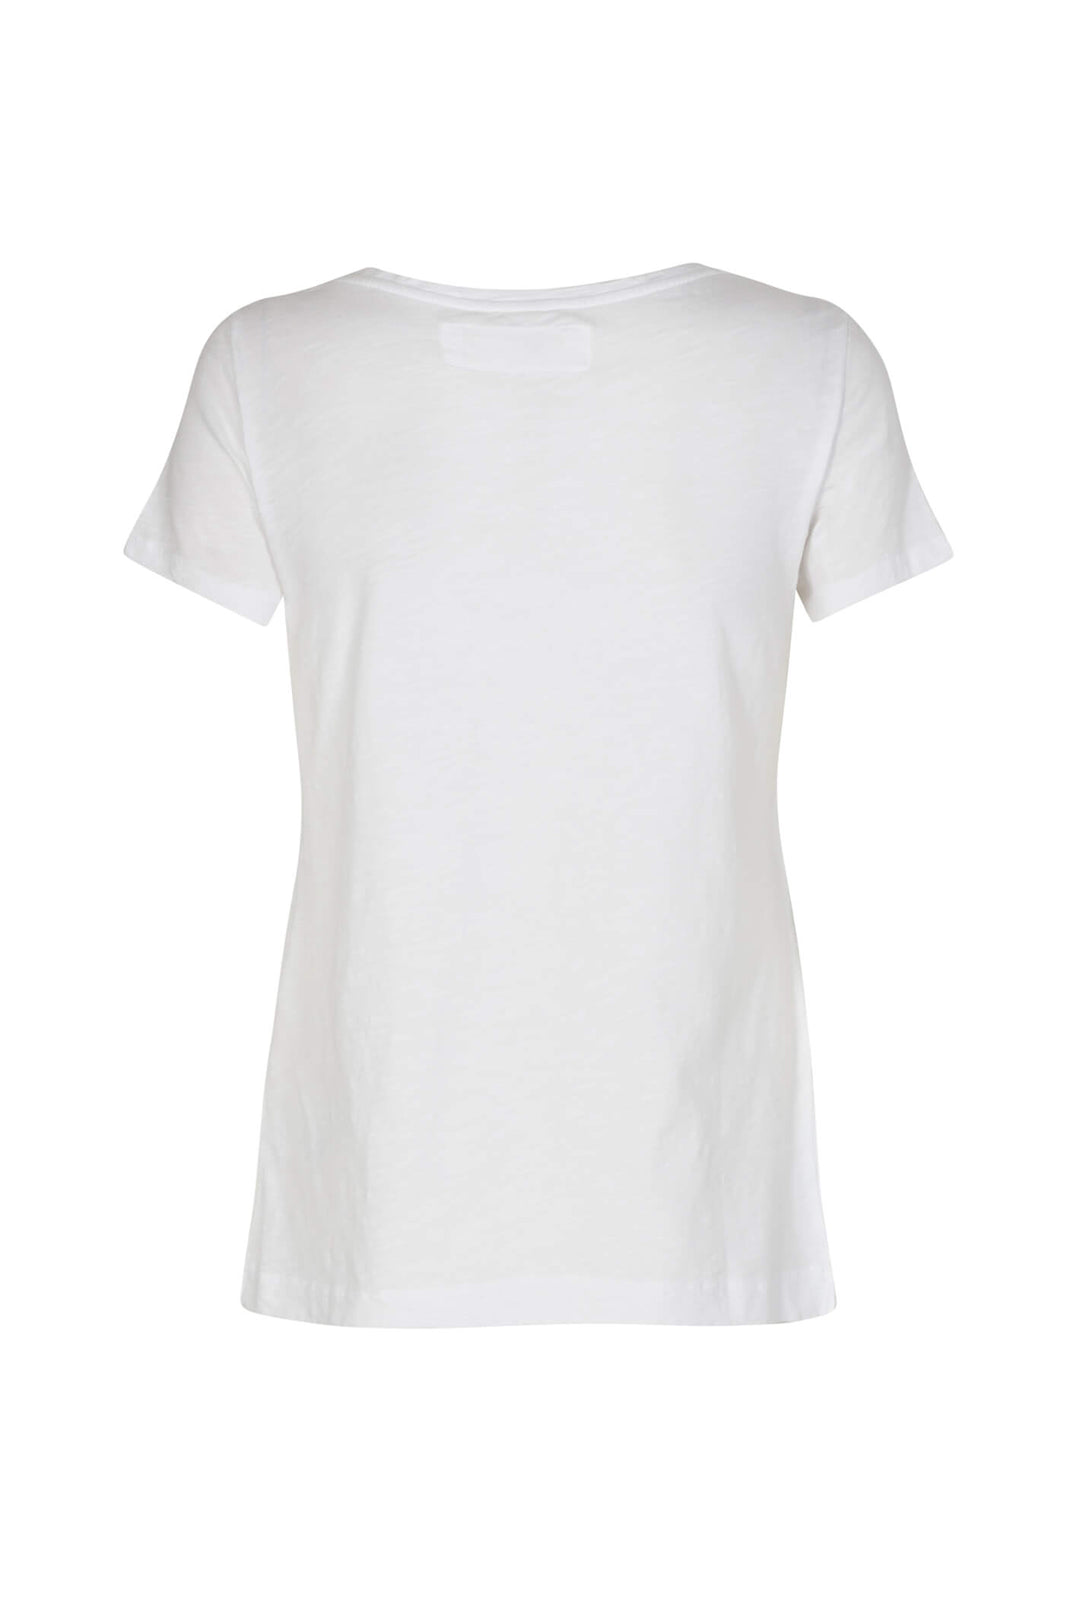 Mos Mosh Arden White Organic O-Neck T-Shirt